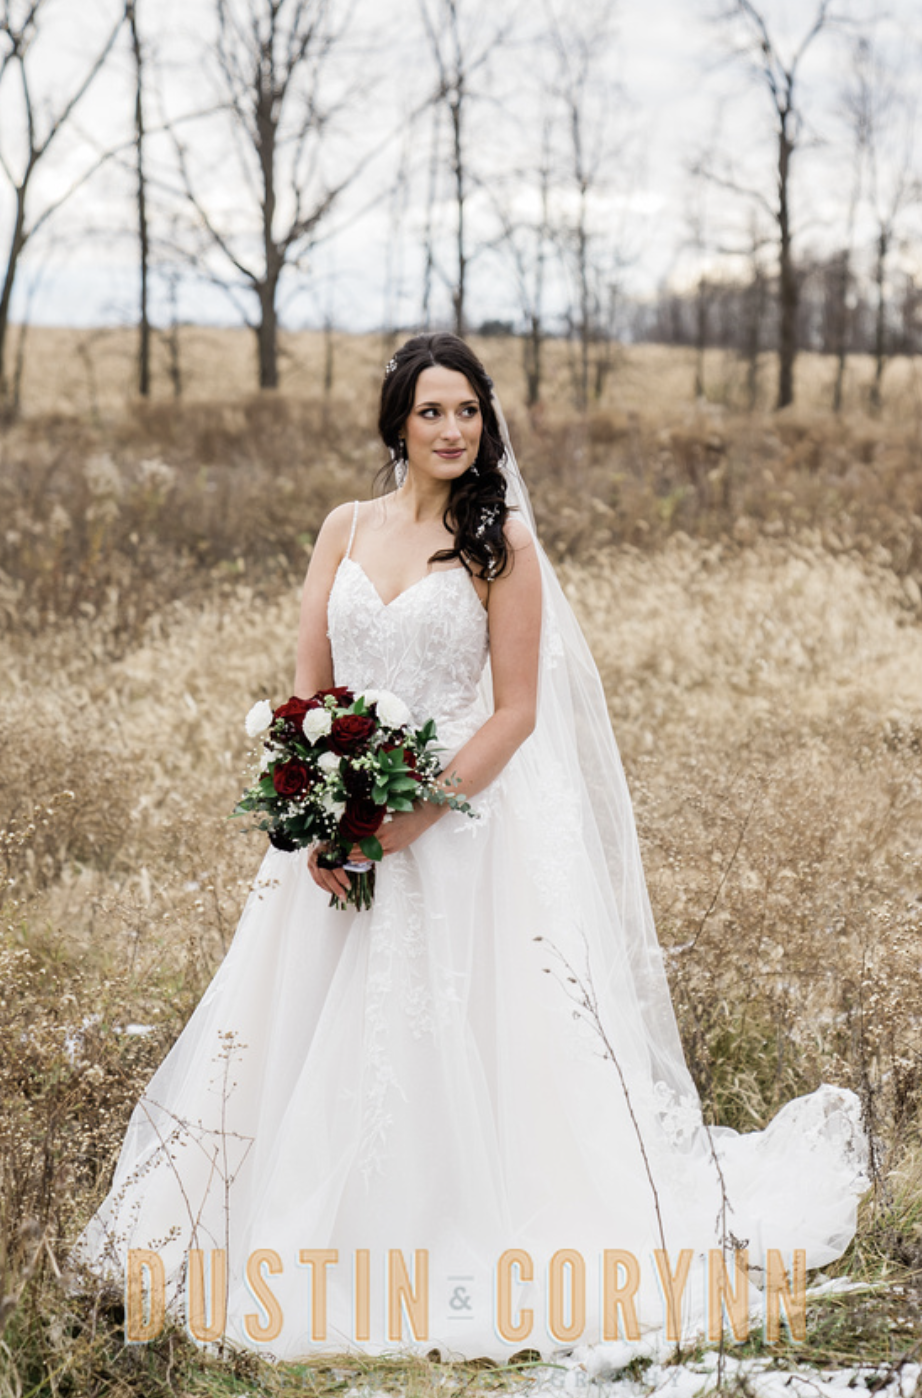 bride wearing strapless wedding gown holding bridal bouquet